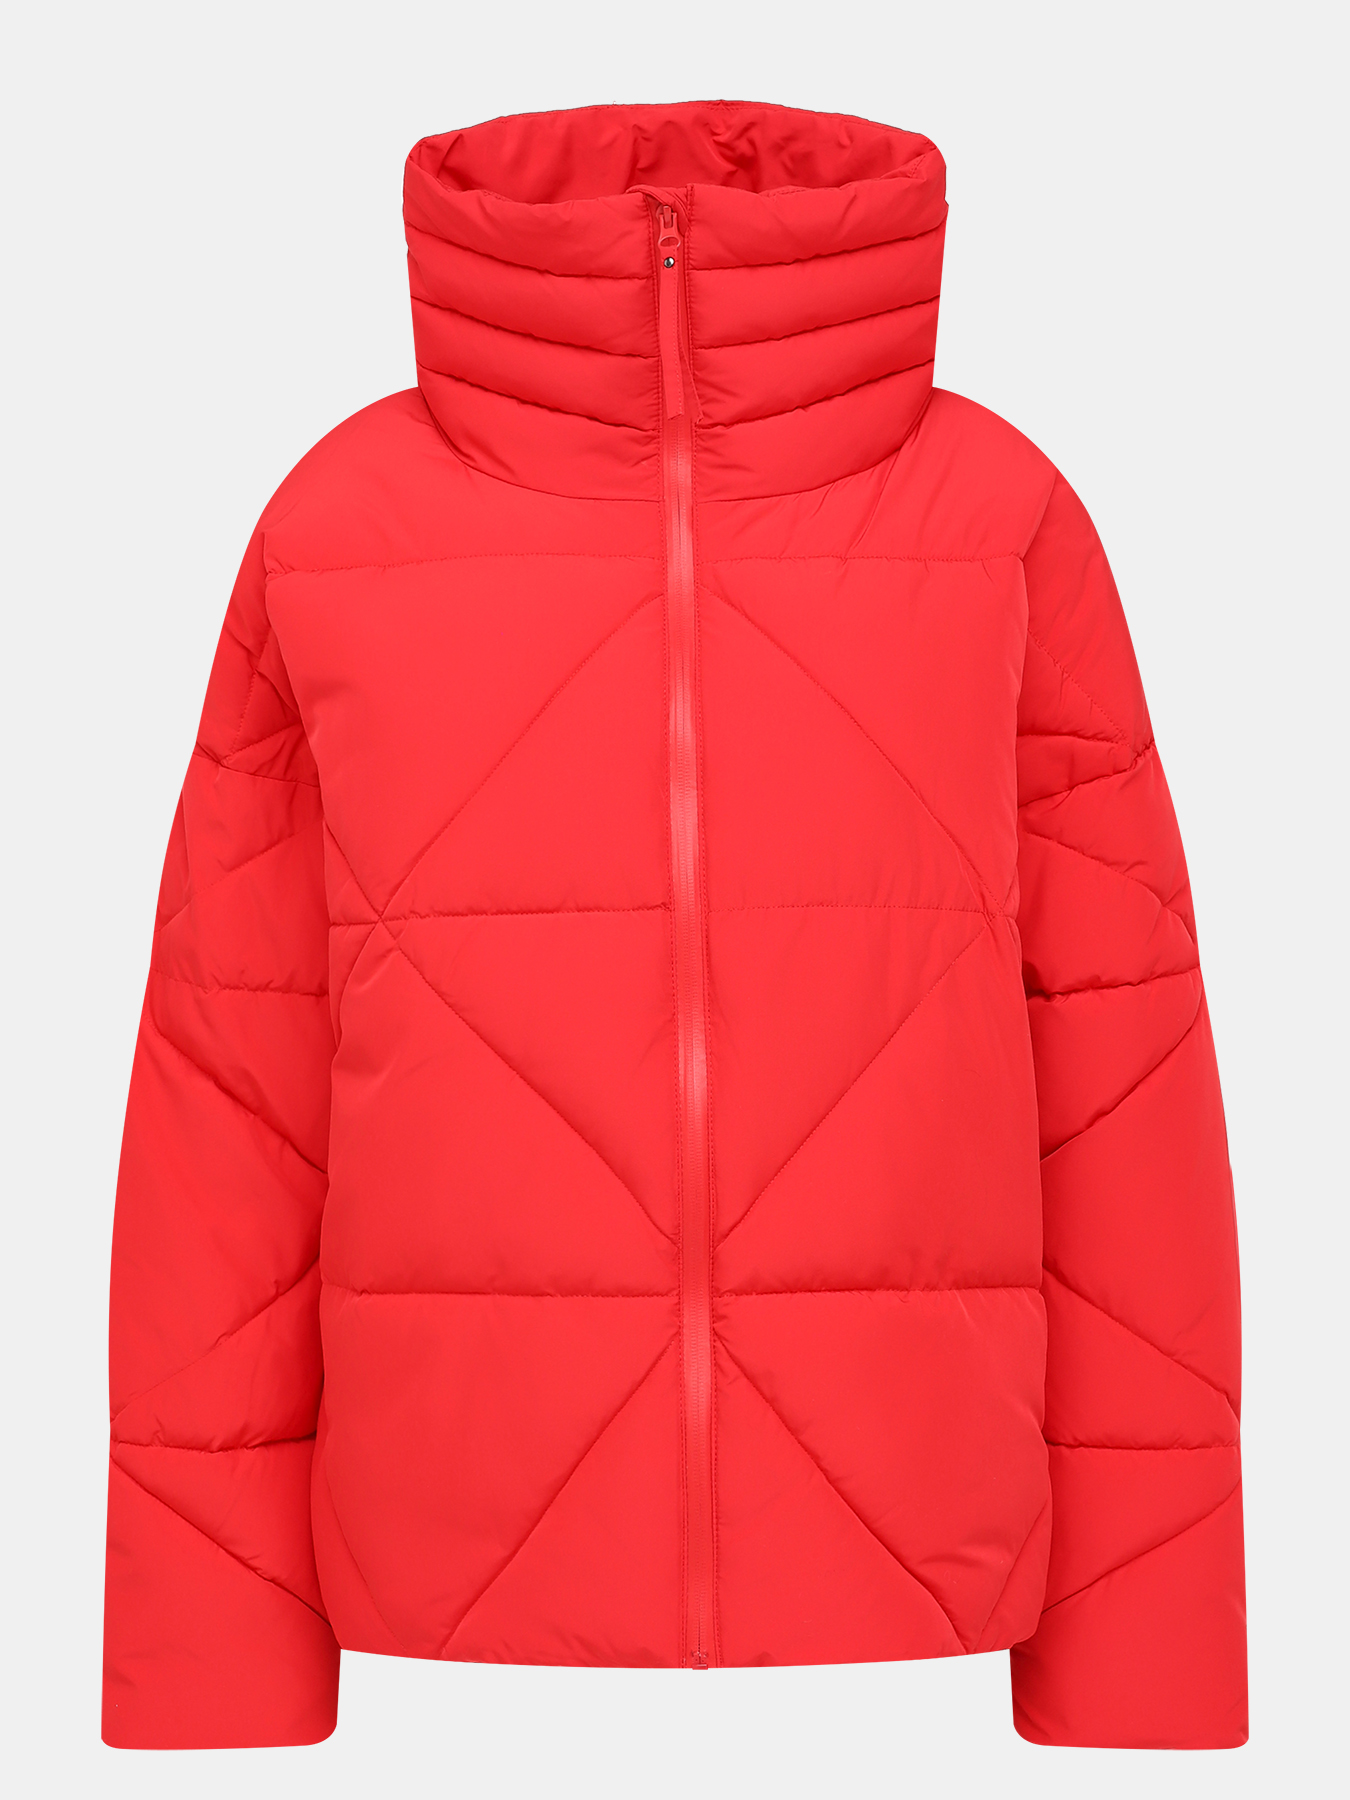 Куртка Riani 427392-020, цвет красный, размер 44